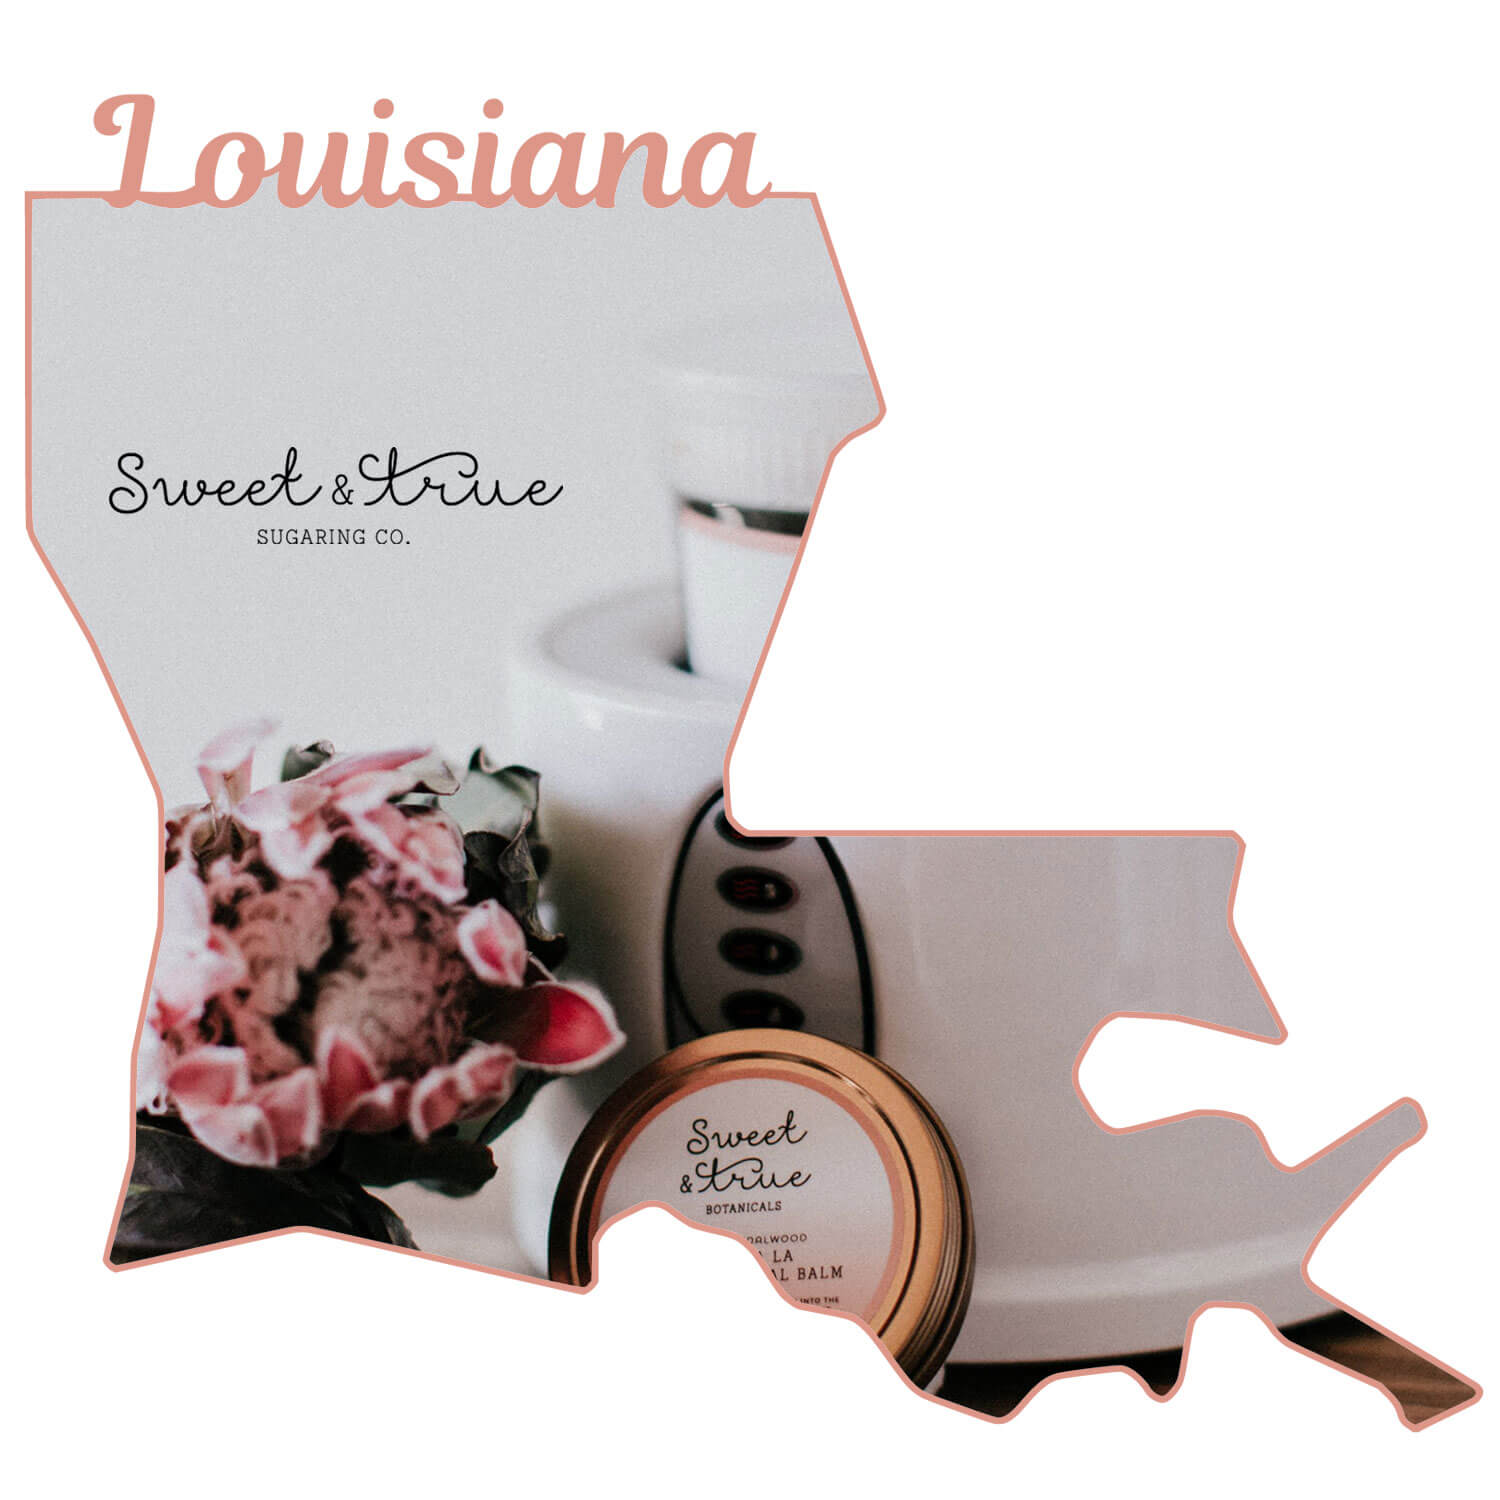 Baton Rouge, Louisiana - Sugaring Certification